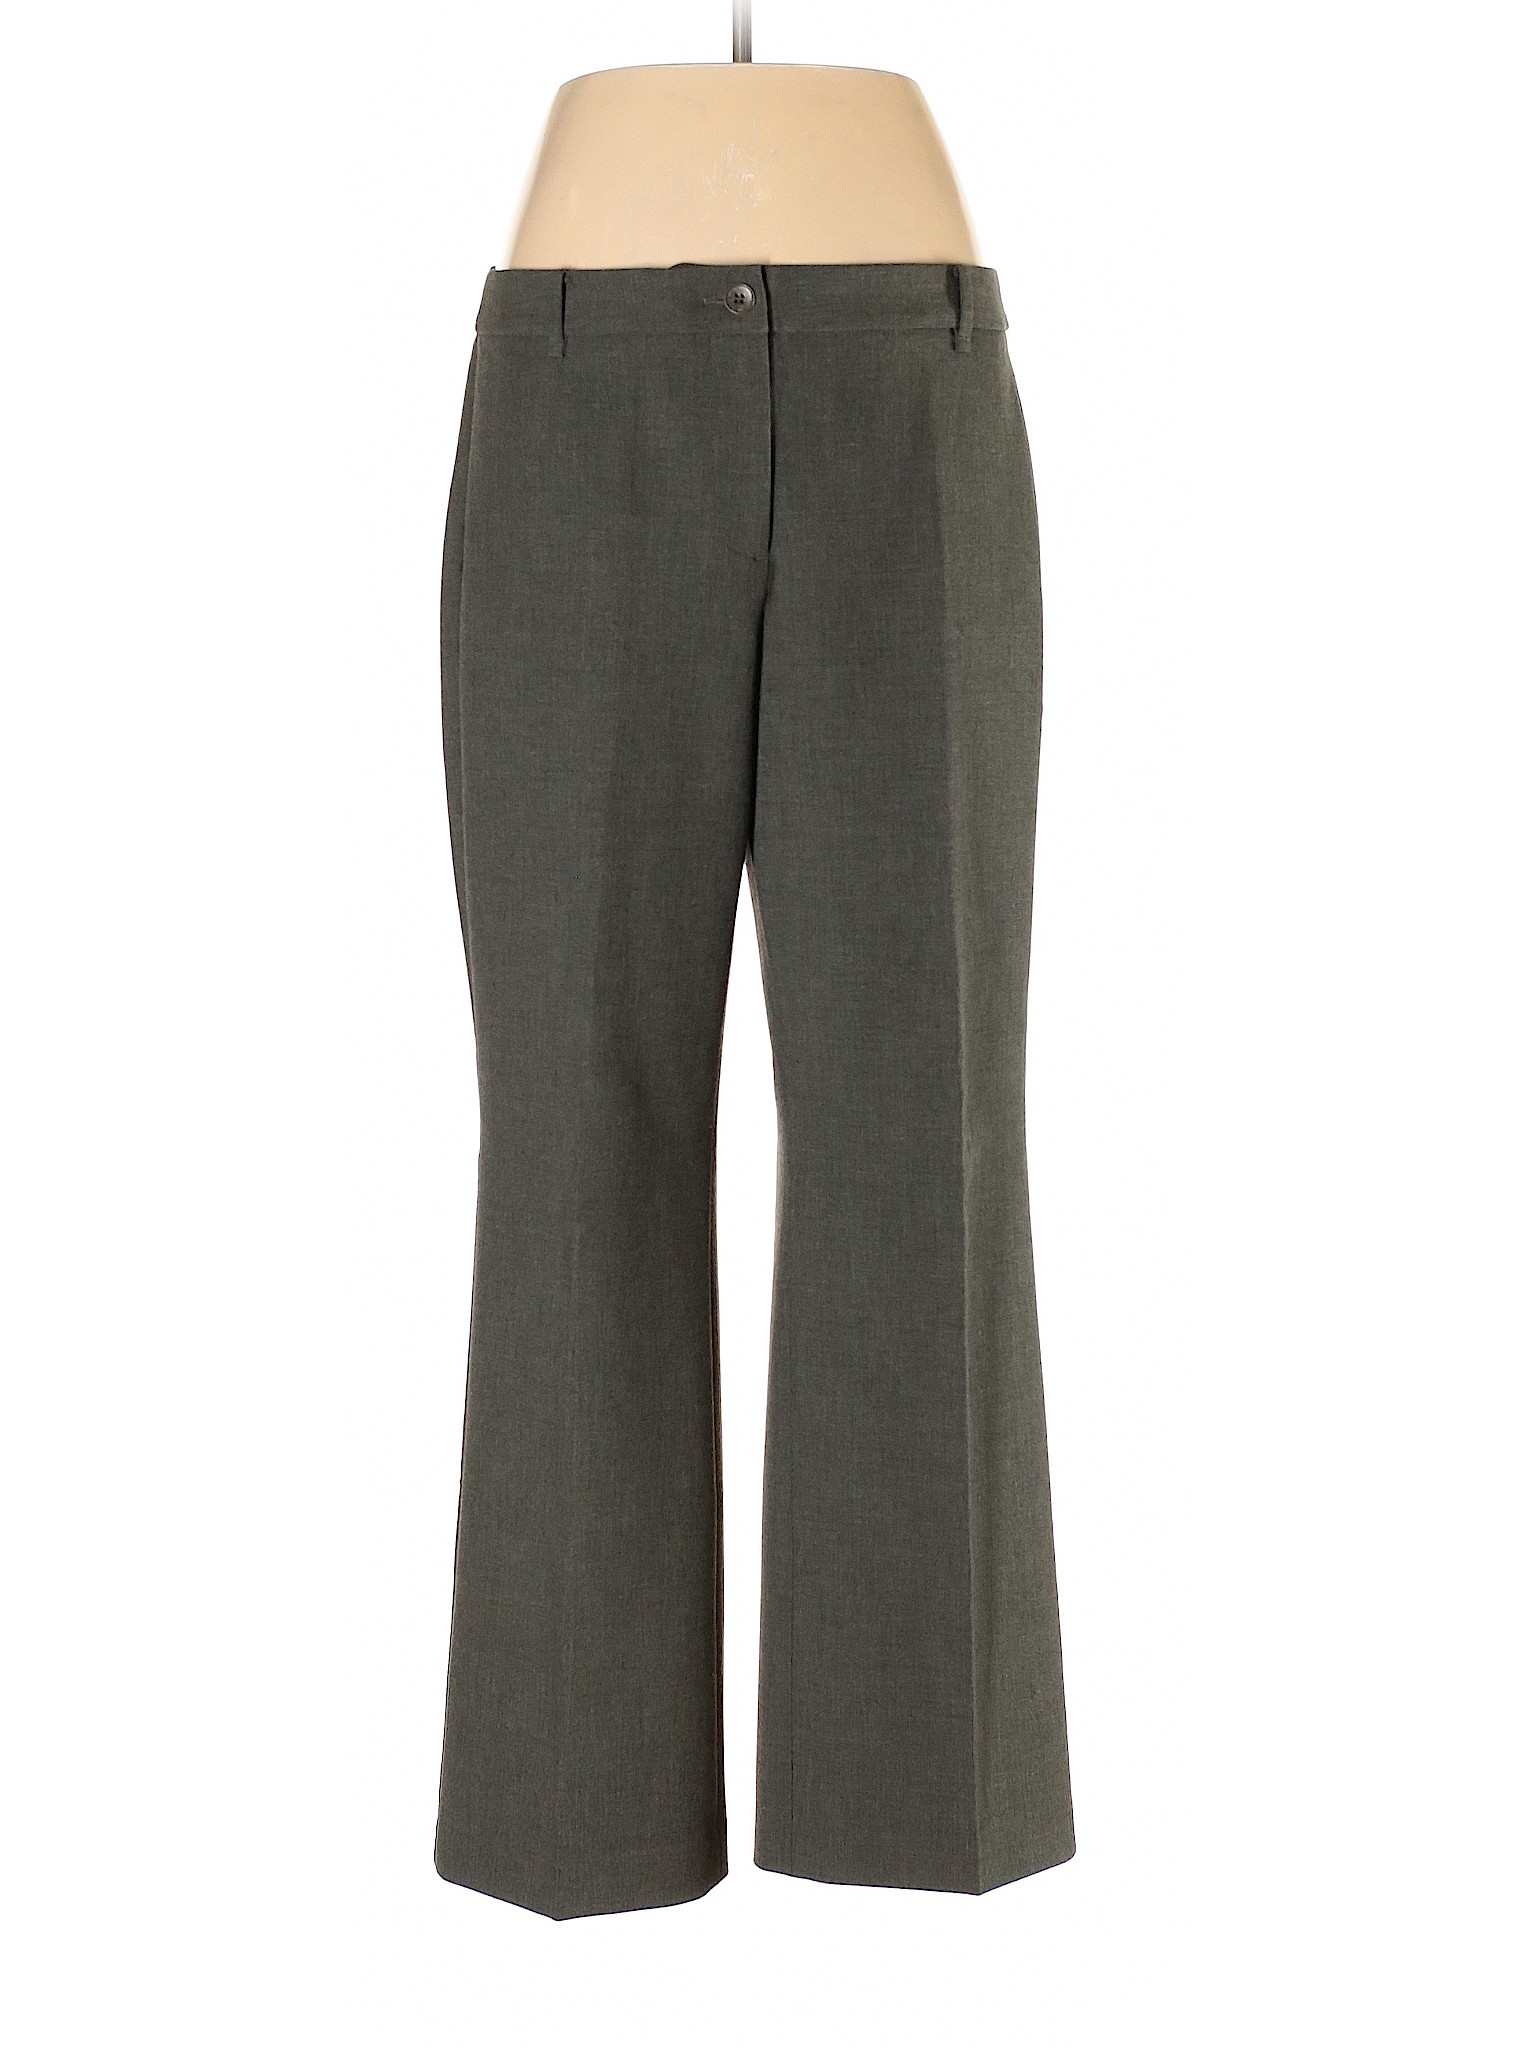 Talbots Women Gray Dress Pants 12 Petites | eBay